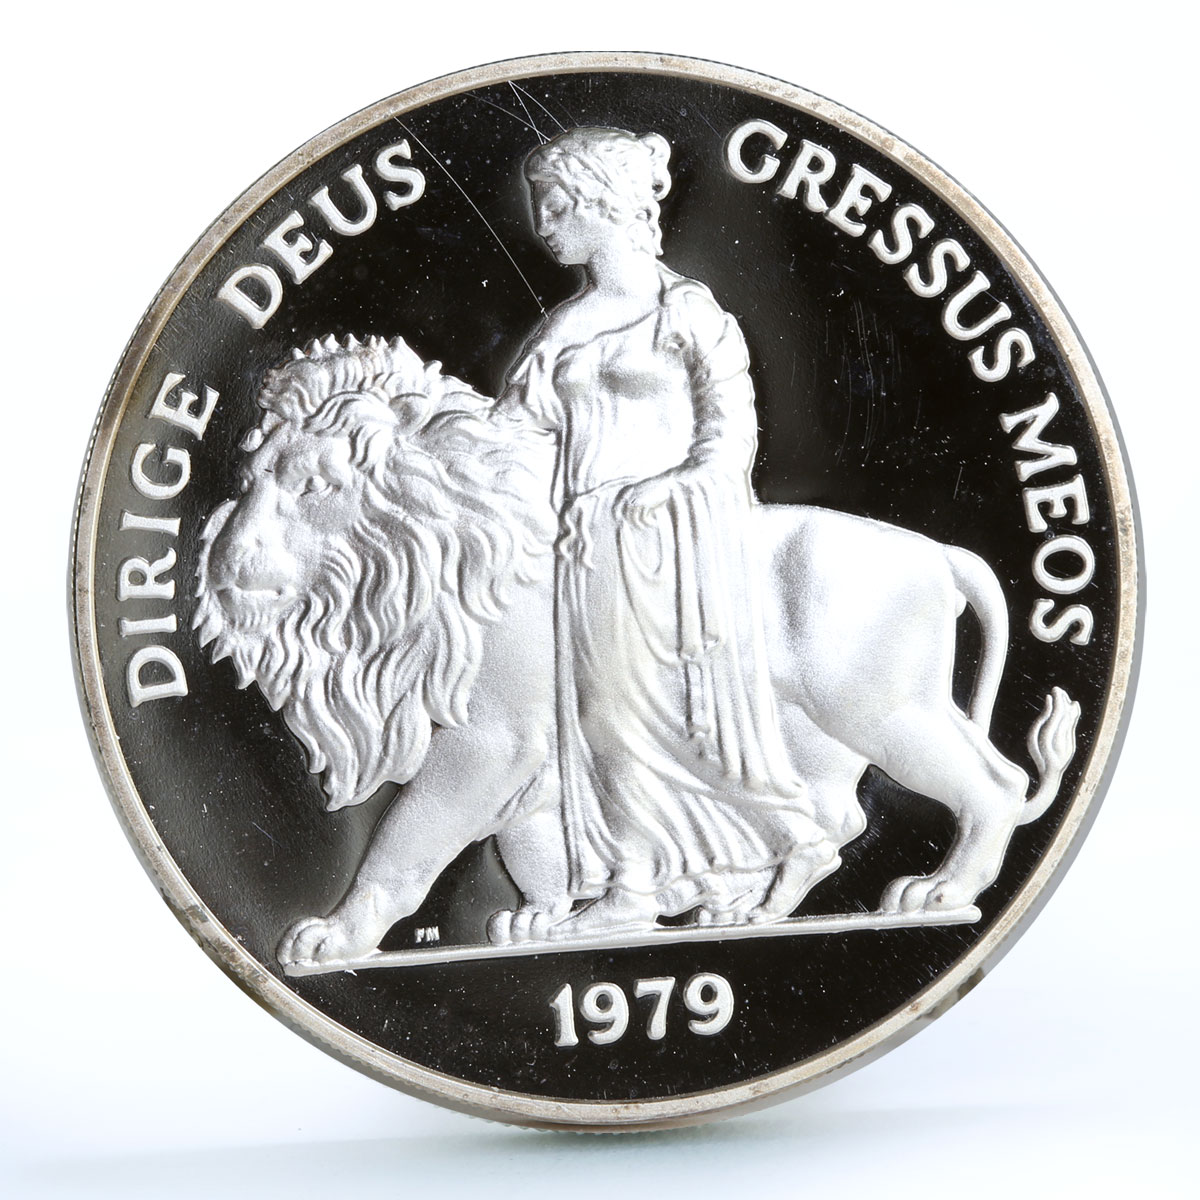 Britain 1st Lady Prime Minister Margaret Thatcher Woman Lion Ag medal coin 1979